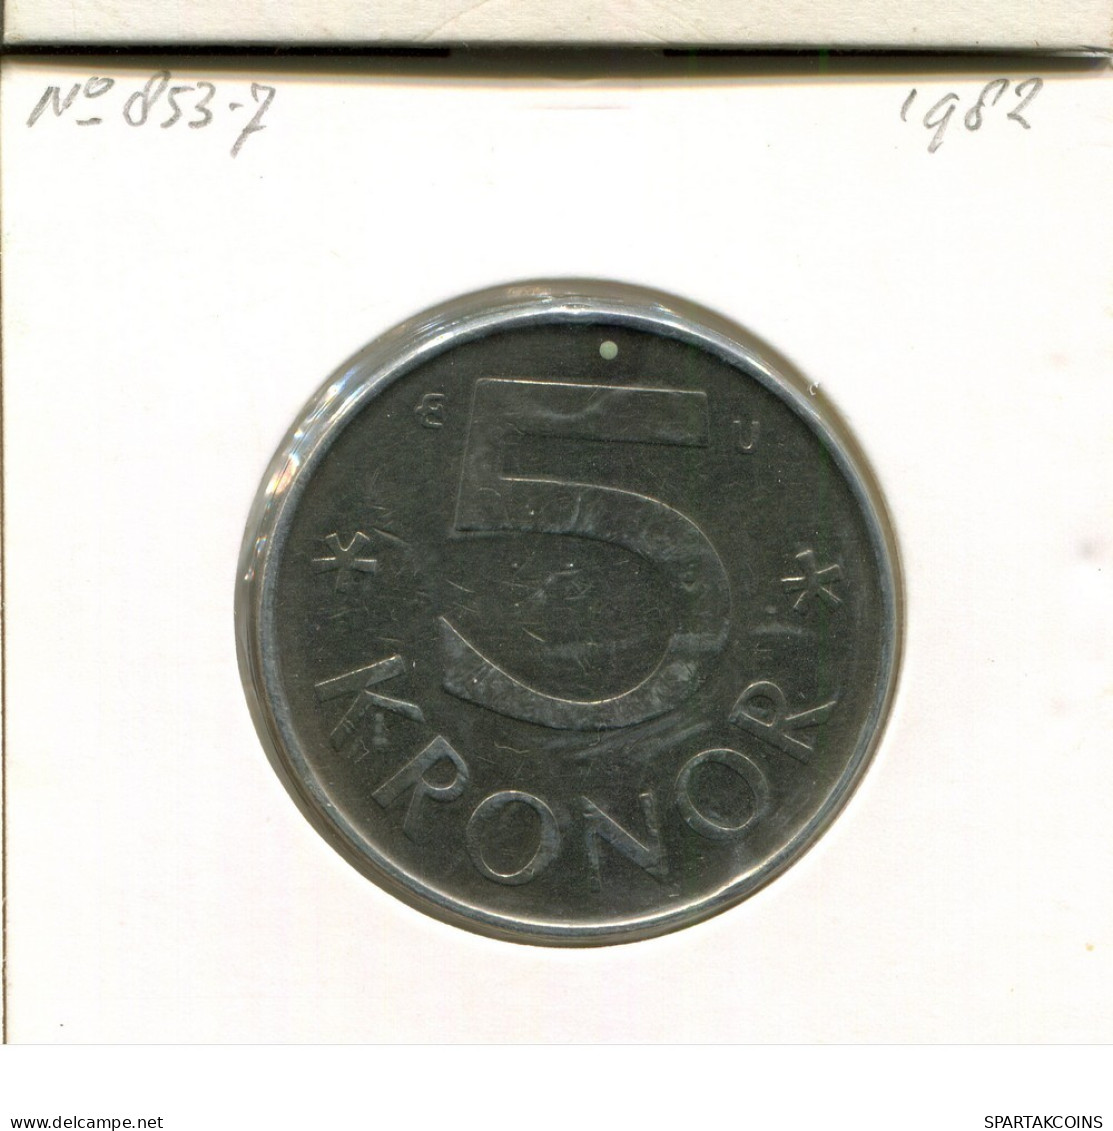 5 KRONOR 1982 SWEDEN Coin #AR515.U.A - Sweden